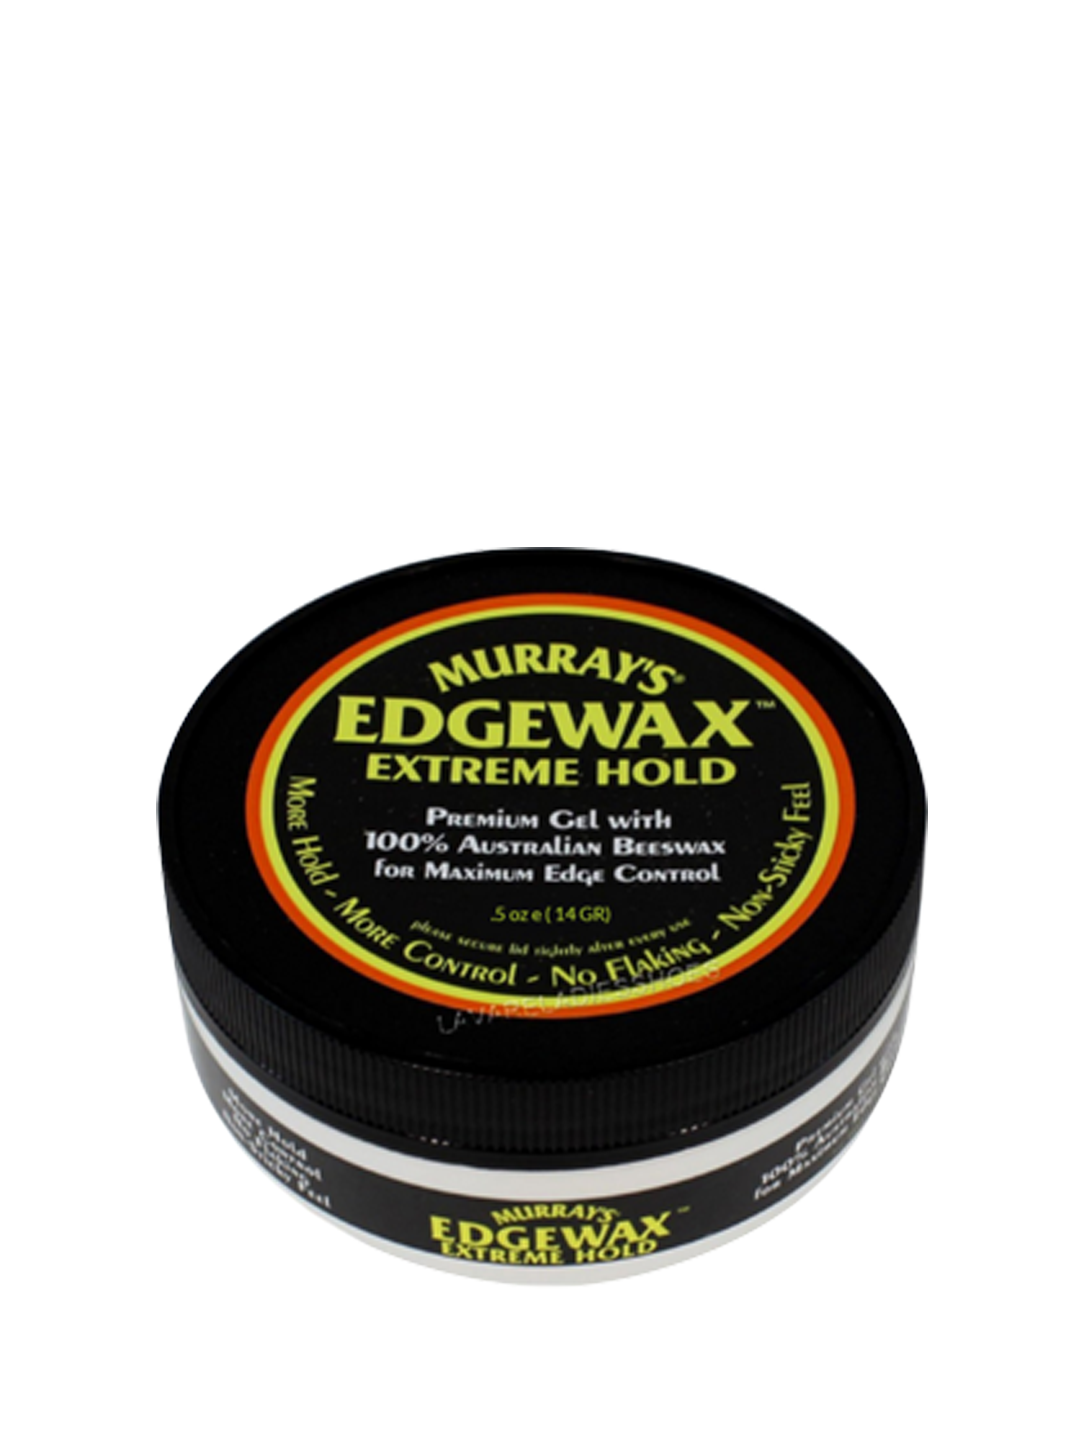 Murray's Edgewax Extreme Hold 0.5 oz